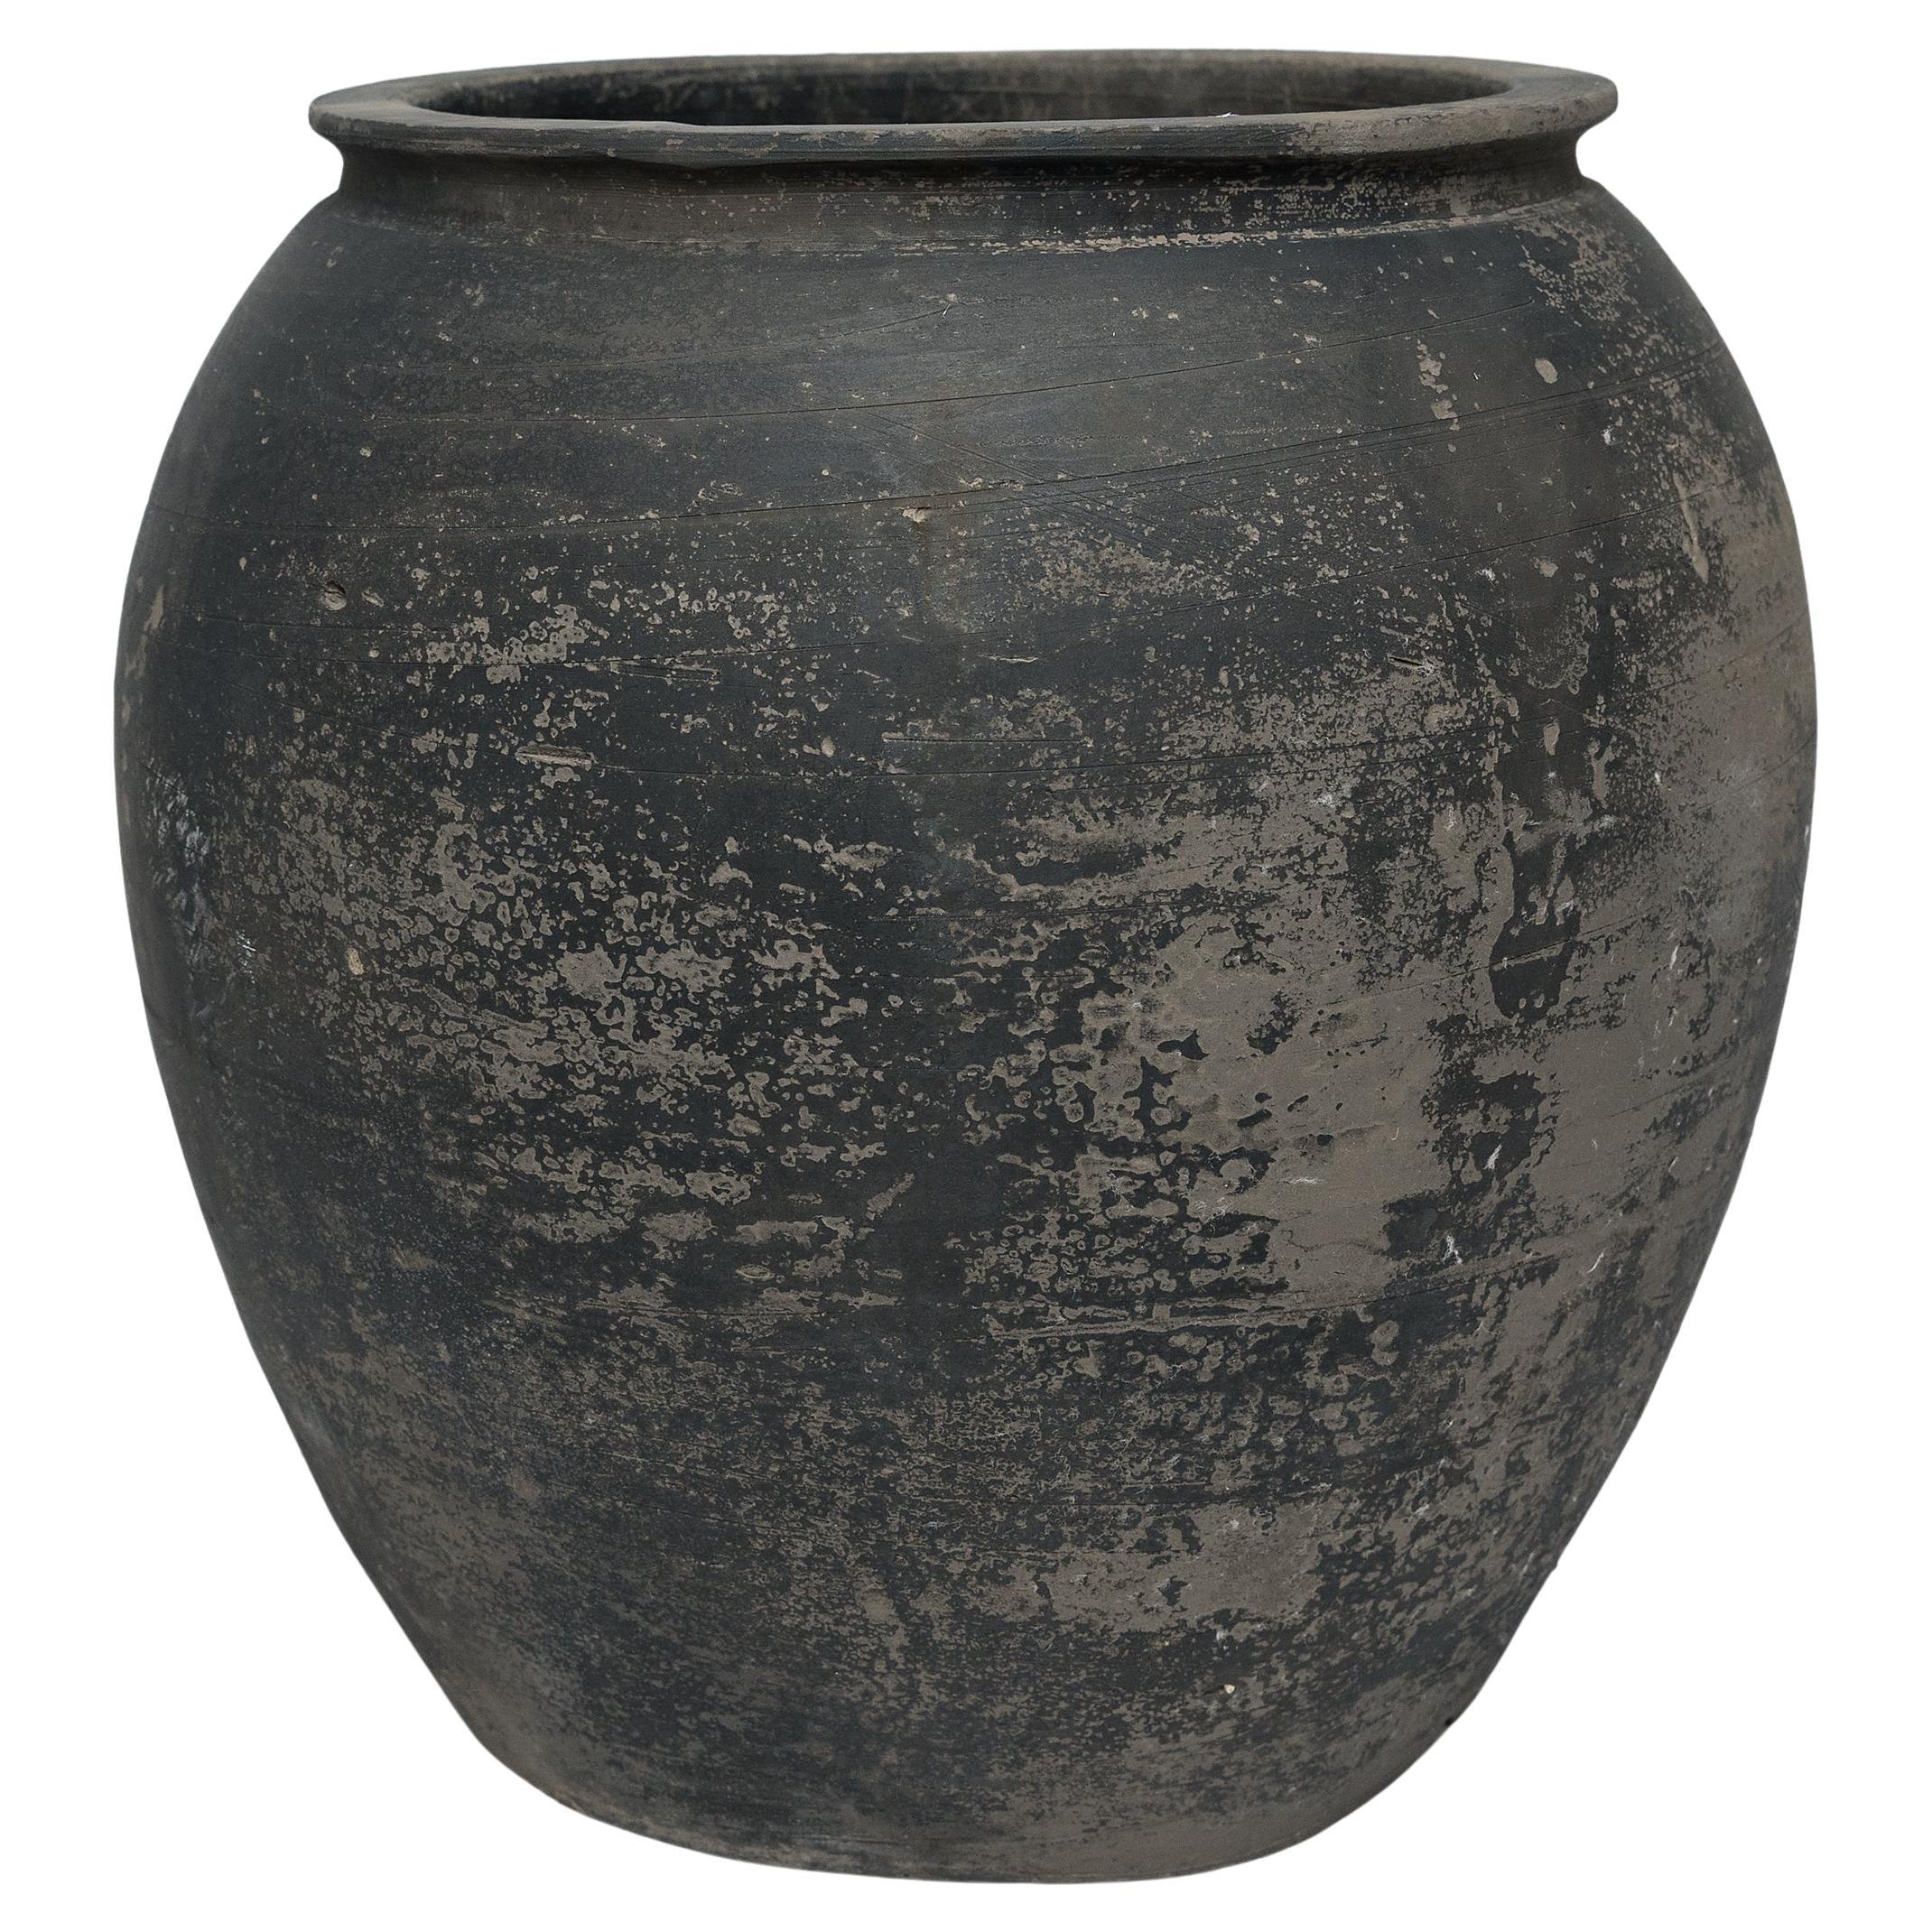 Chinese Black Clay Vessel, circa 1900